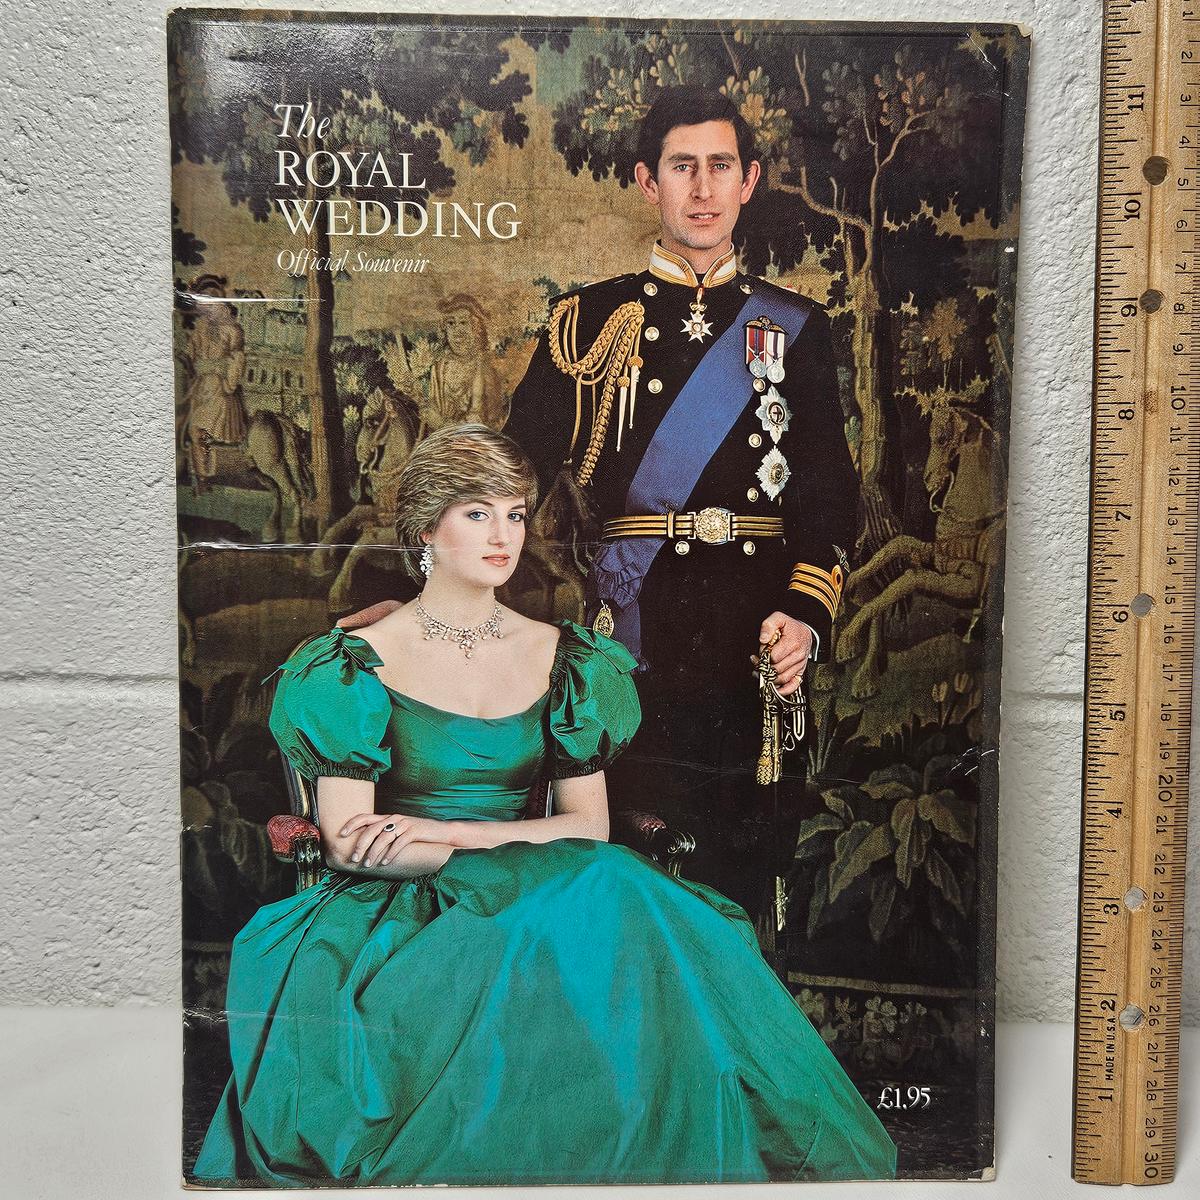 “The Royal Wedding” Official Souvenir Book of Princess Diana and Prince Charles